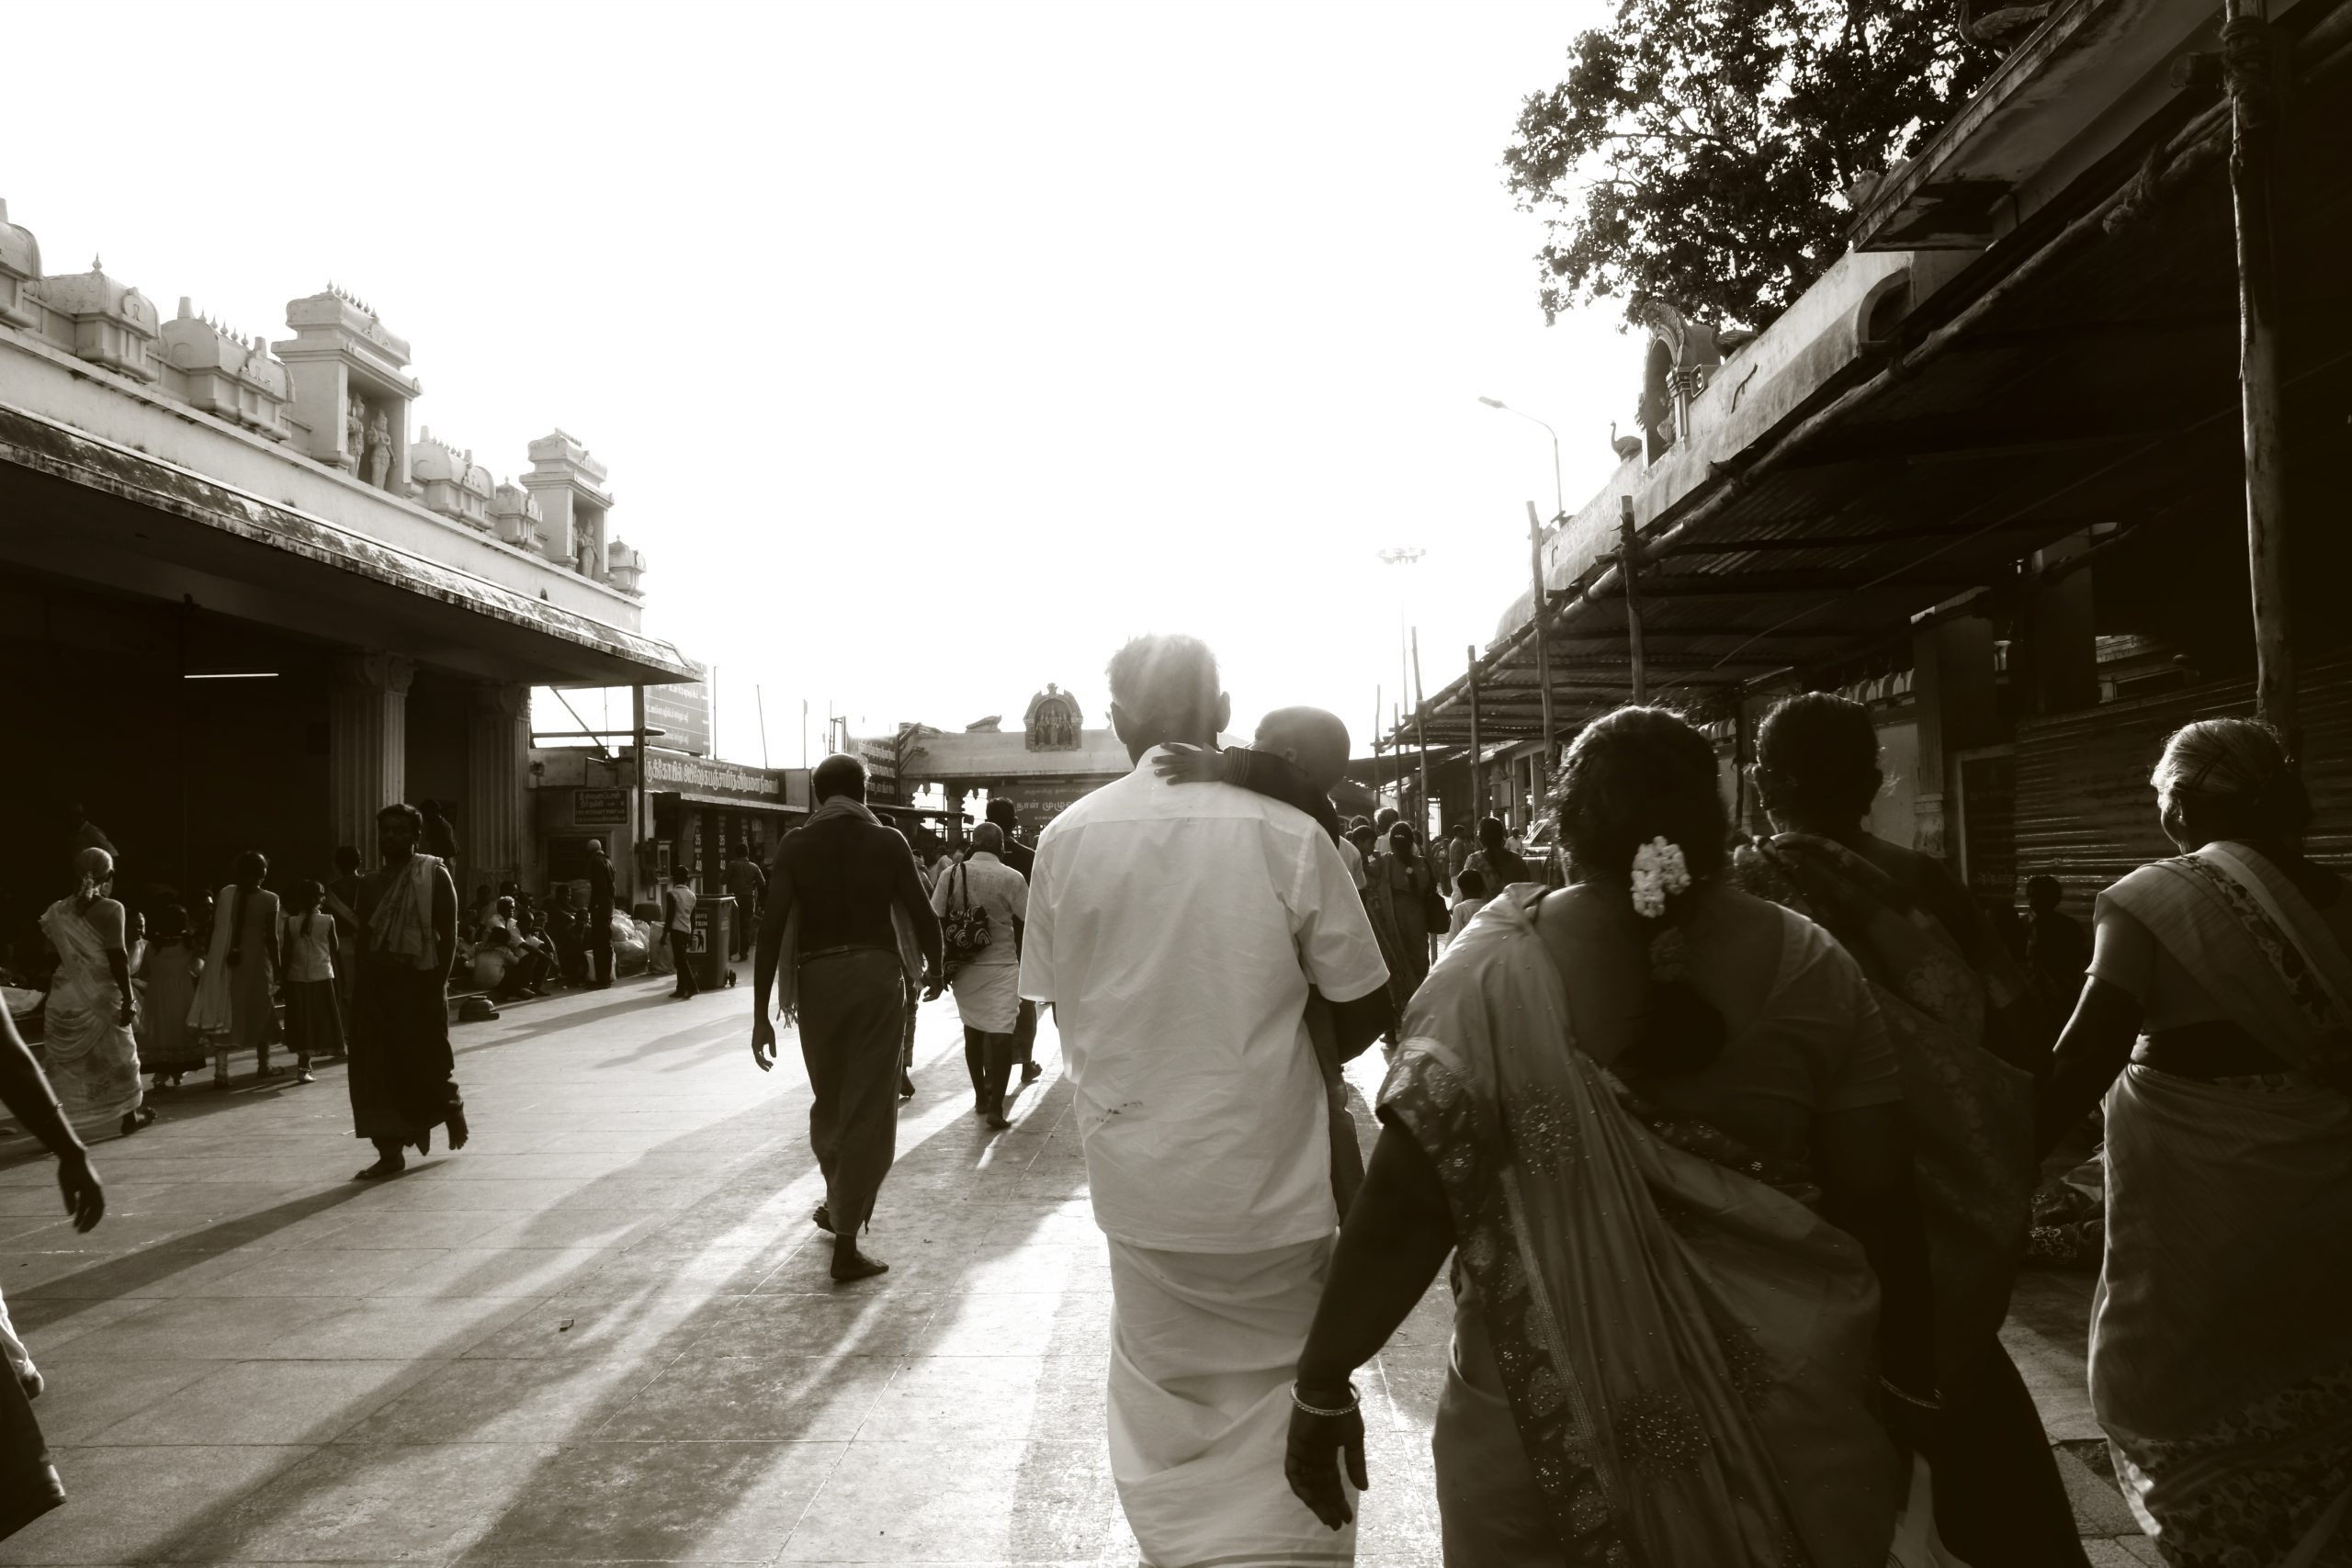 Hindu Pilgrimage